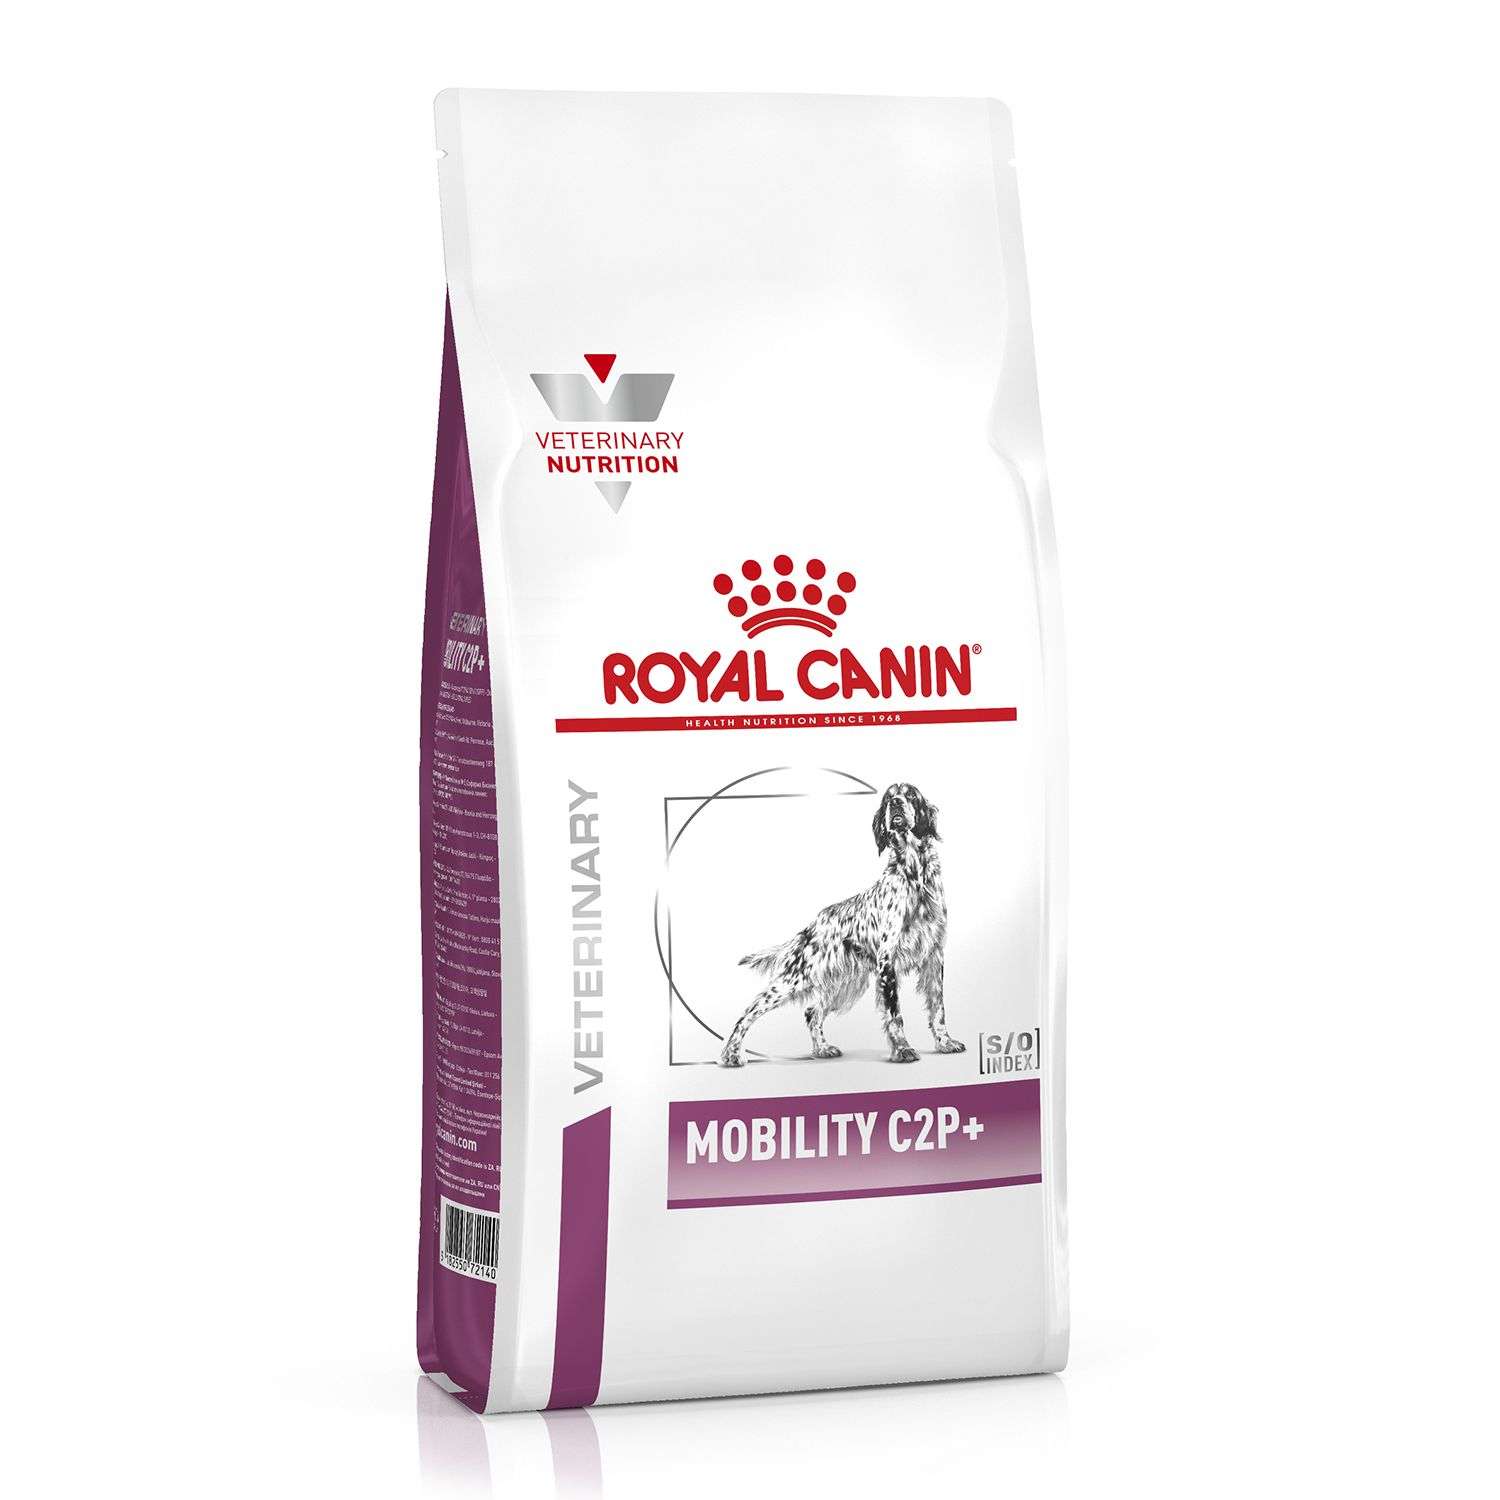 Корм для собак ROYAL CANIN Mobility c2p+ при заболеваниях oпорно-двигательного aппарата 12кг - фото 1